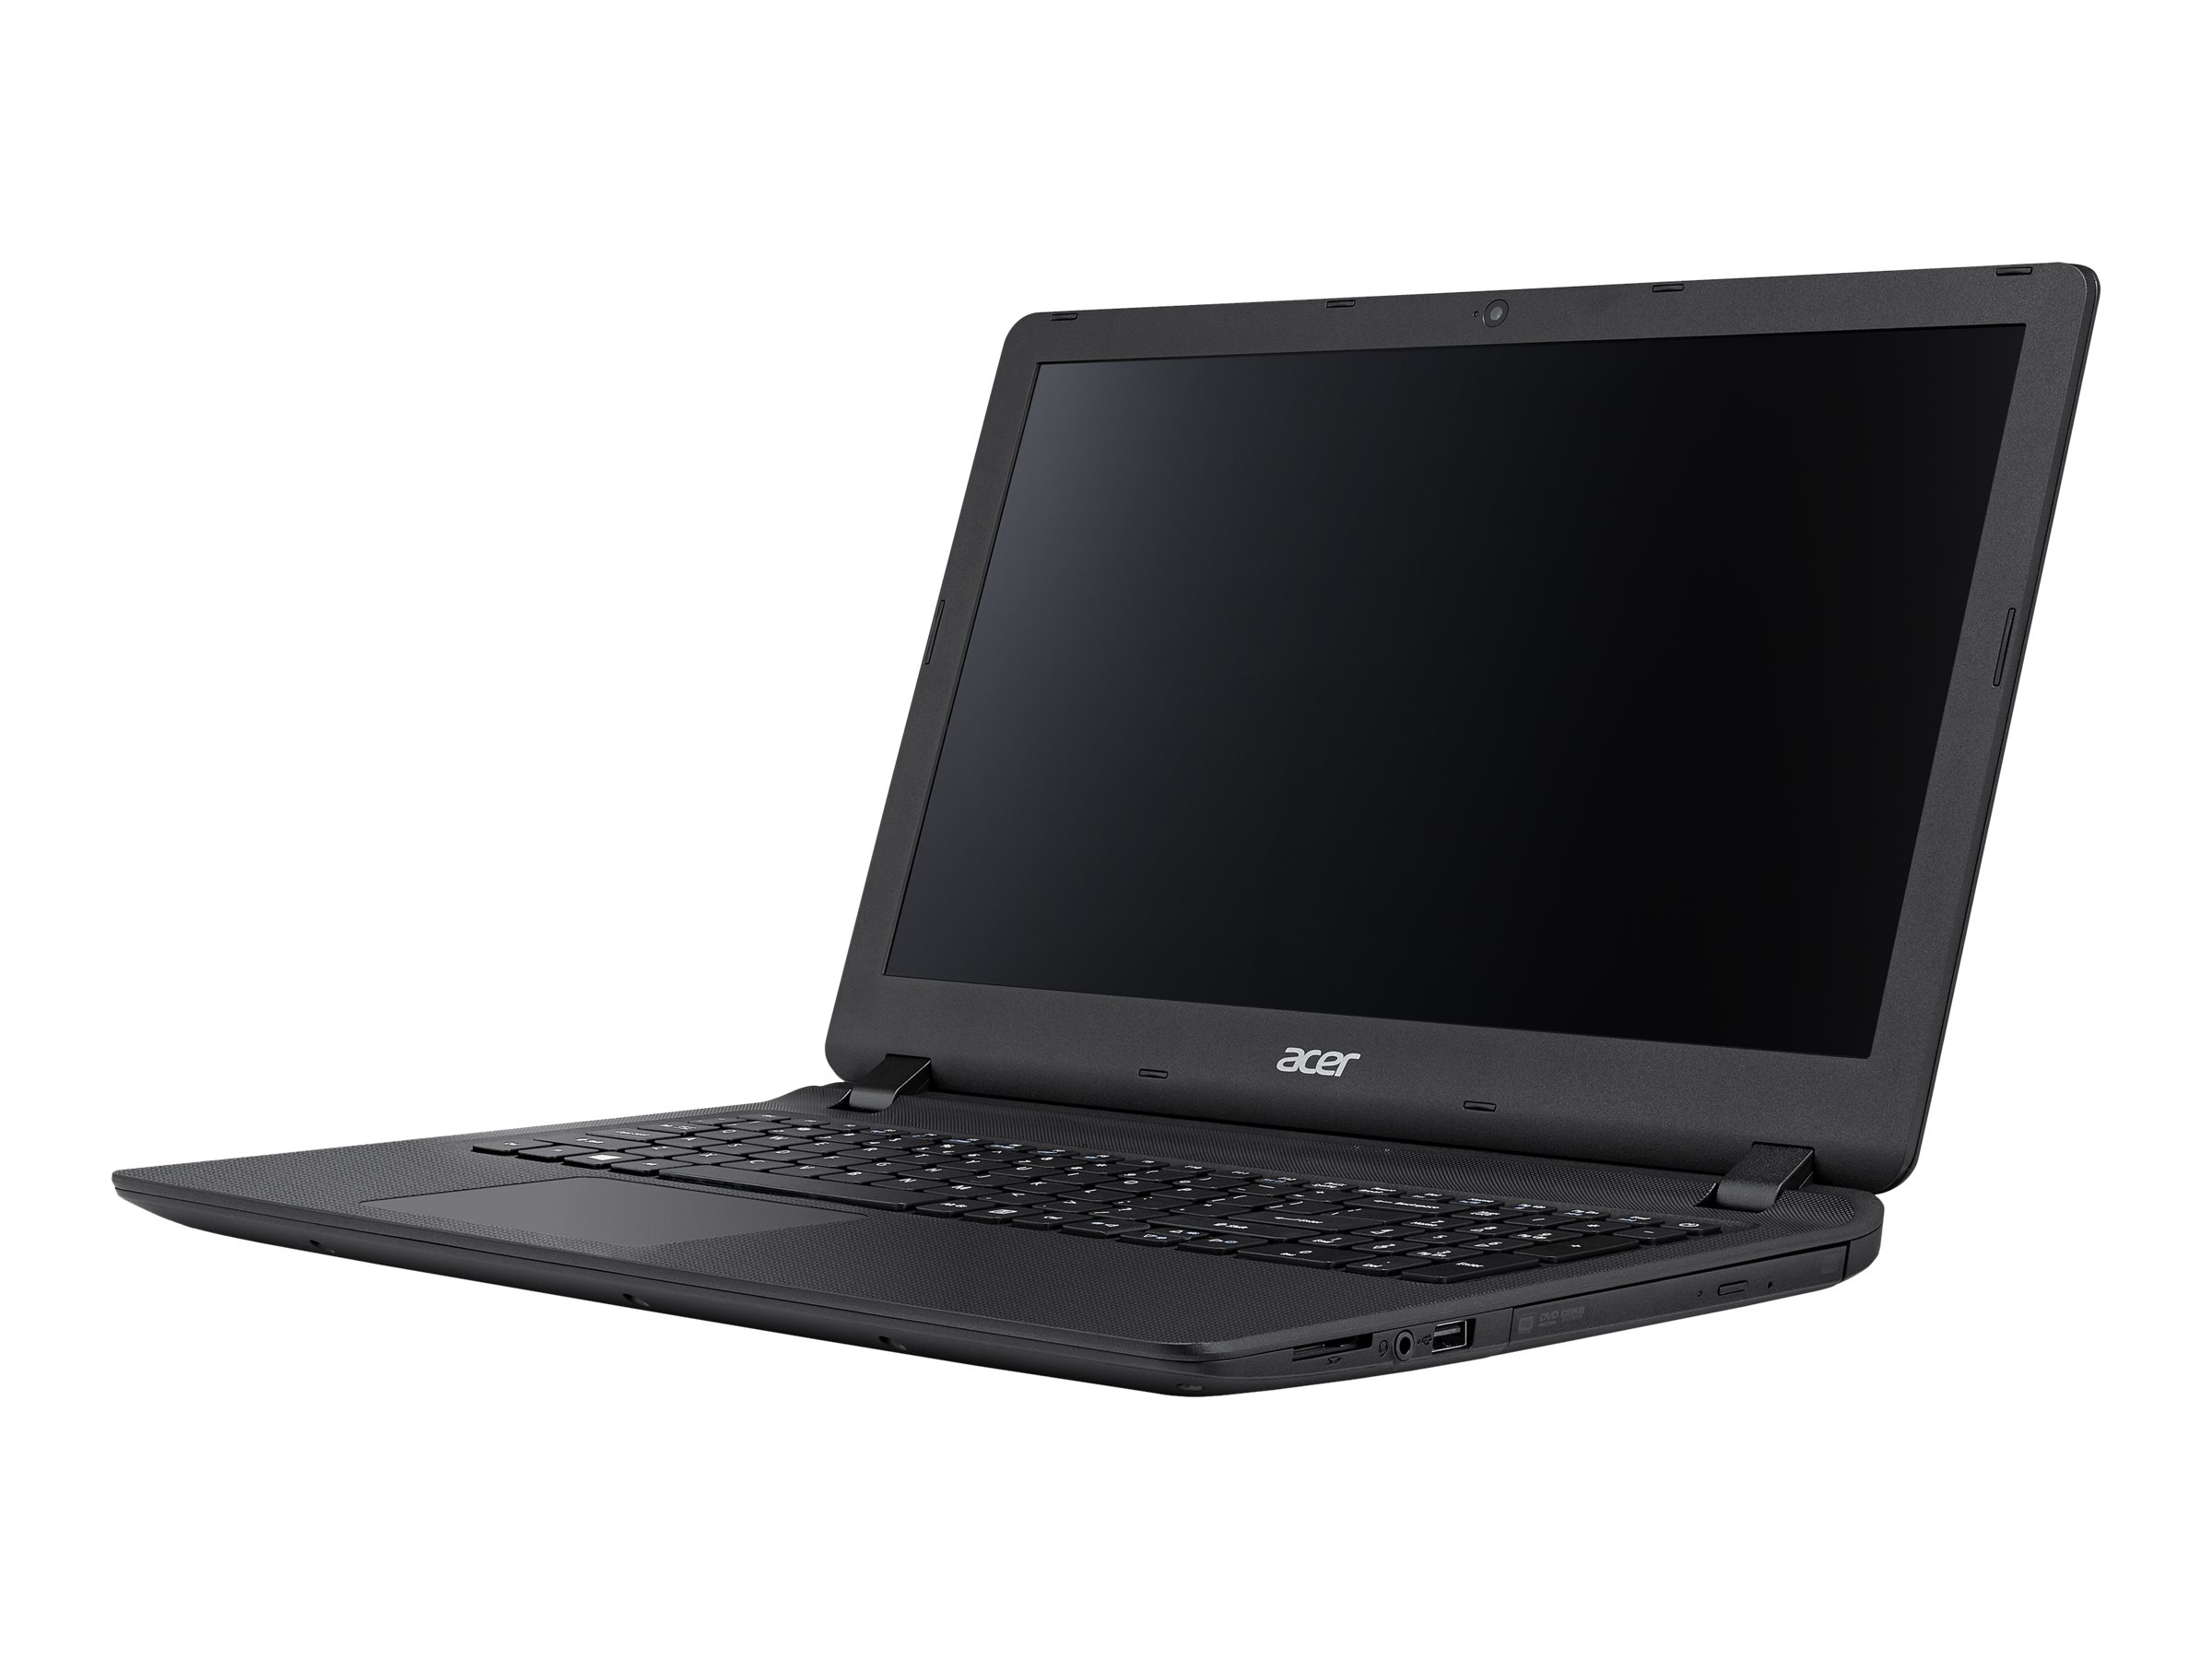 Acer Aspire 15.6" Laptop, Intel Core i3 i3-6100U, 1TB HD, DVD Writer, Windows 10 Home, ES1-572-31XL - image 1 of 5